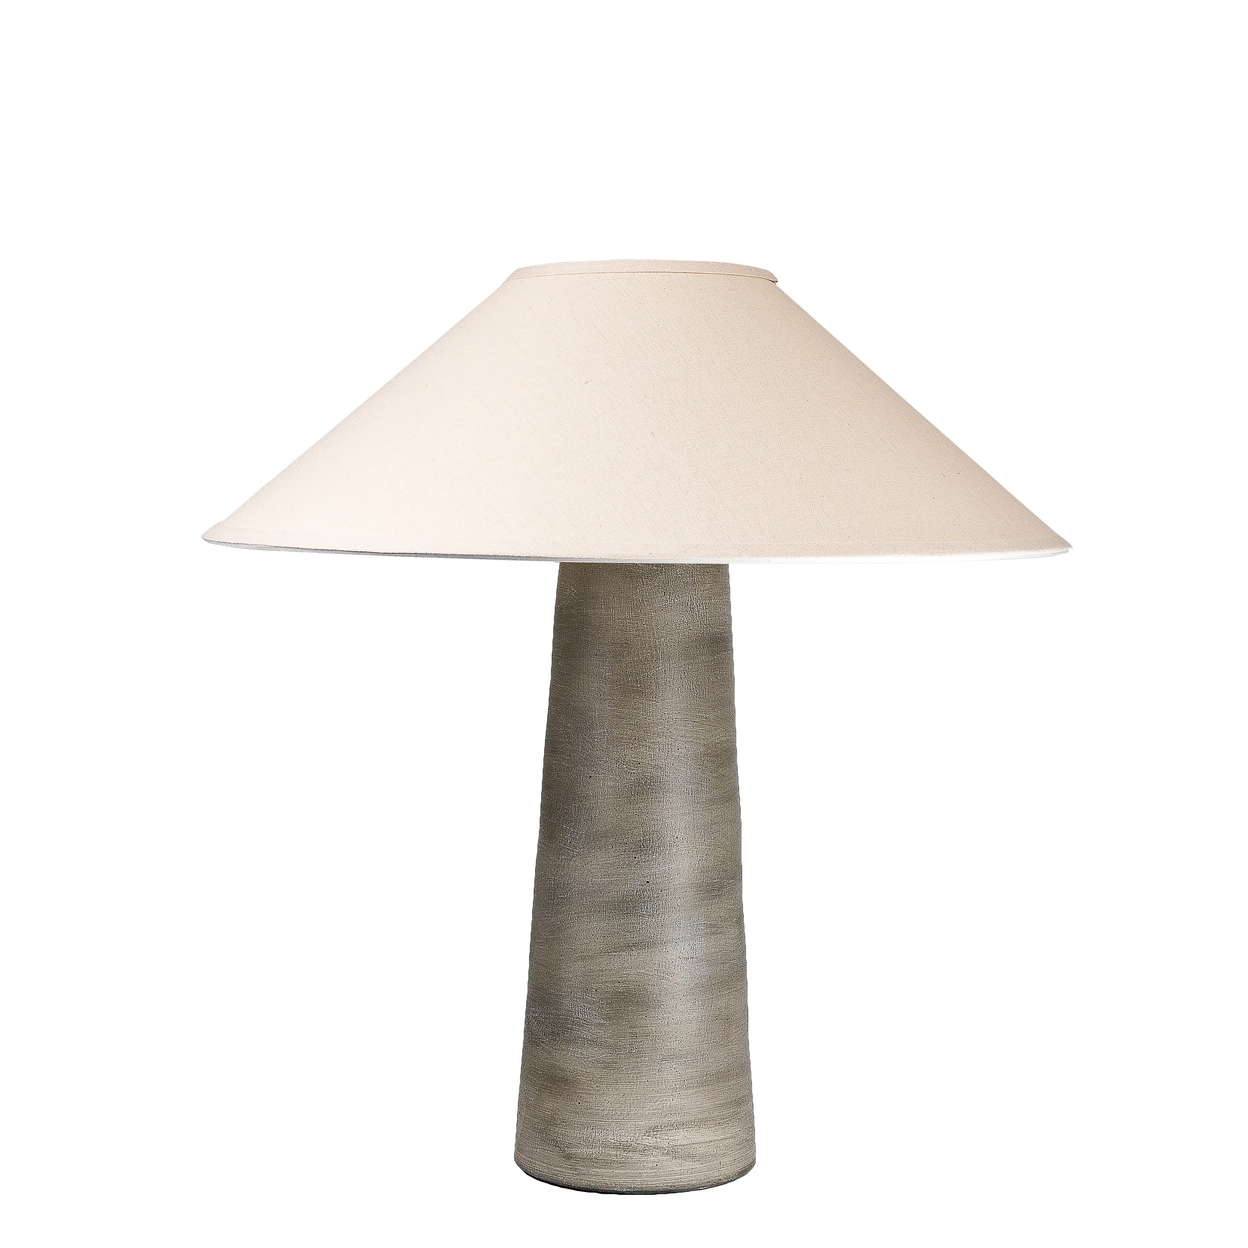 Bali 23 Inch Table Lamp, Classic Empire Shade, Cylinder Base, Smooth Gray - Saltoro Sherpi